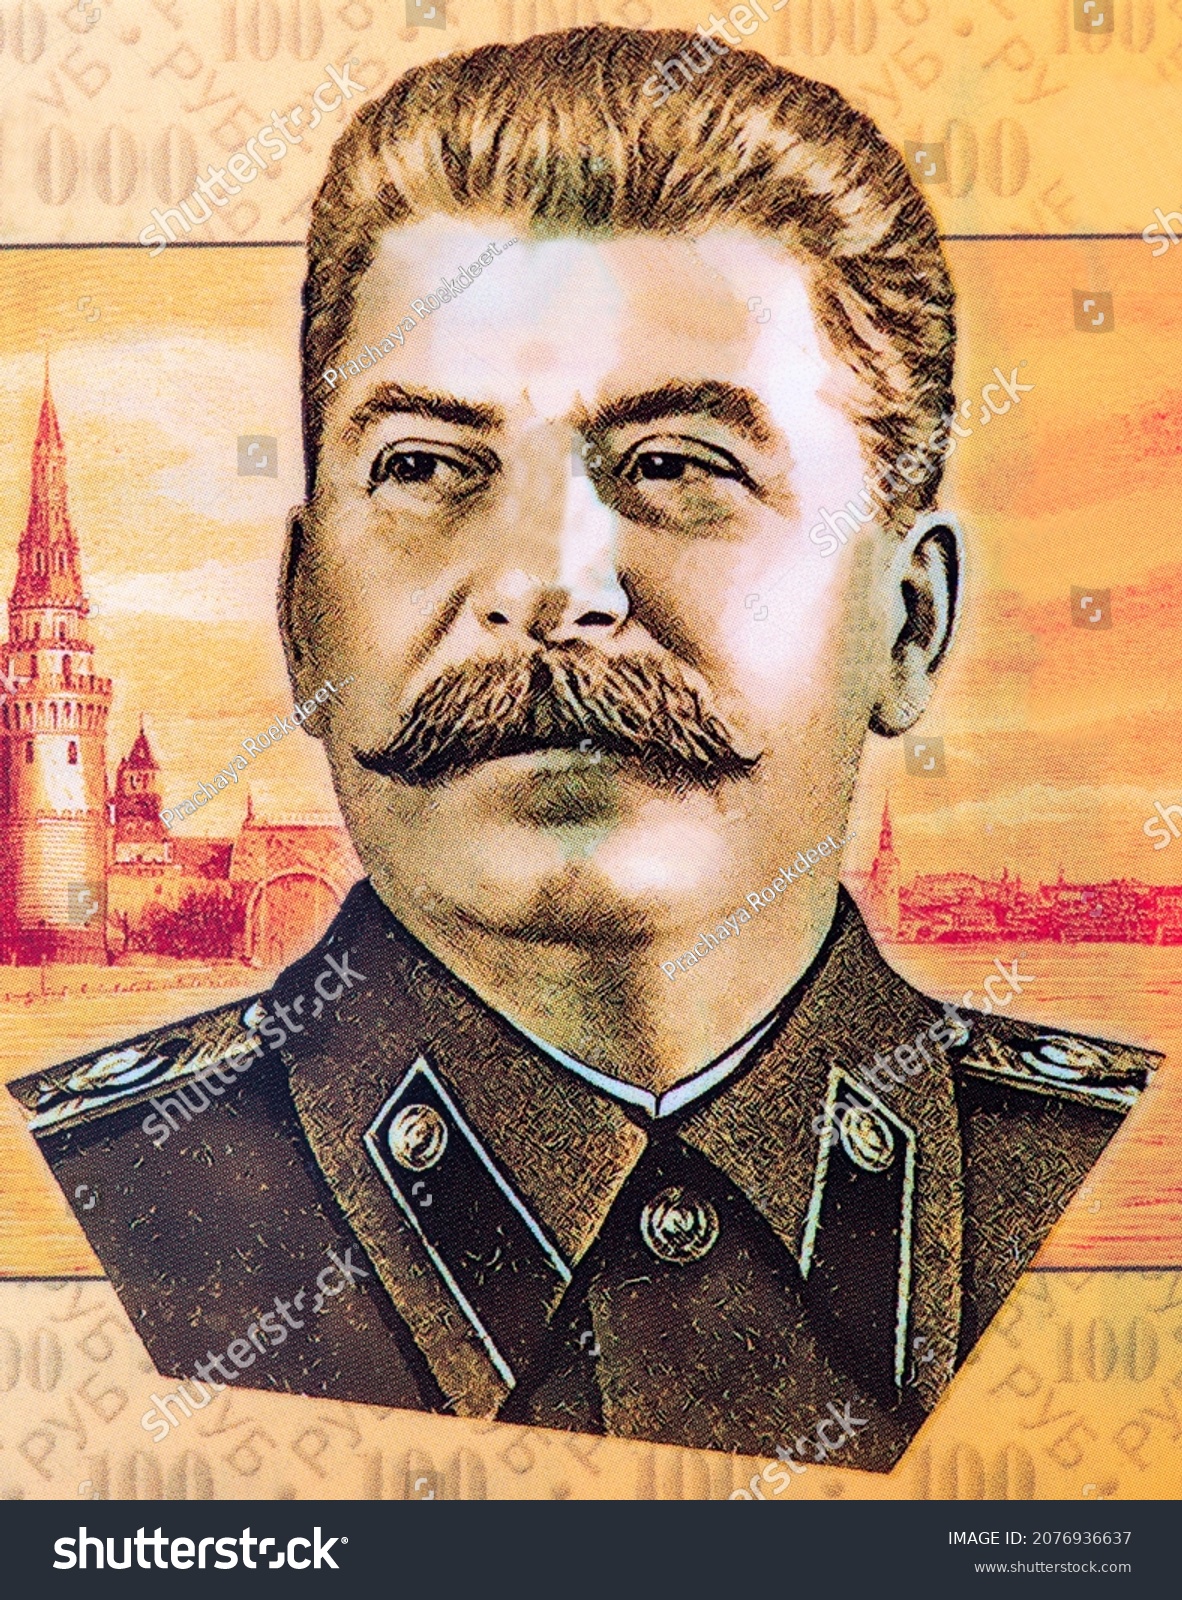 Stalin joseph Stalin's Death: